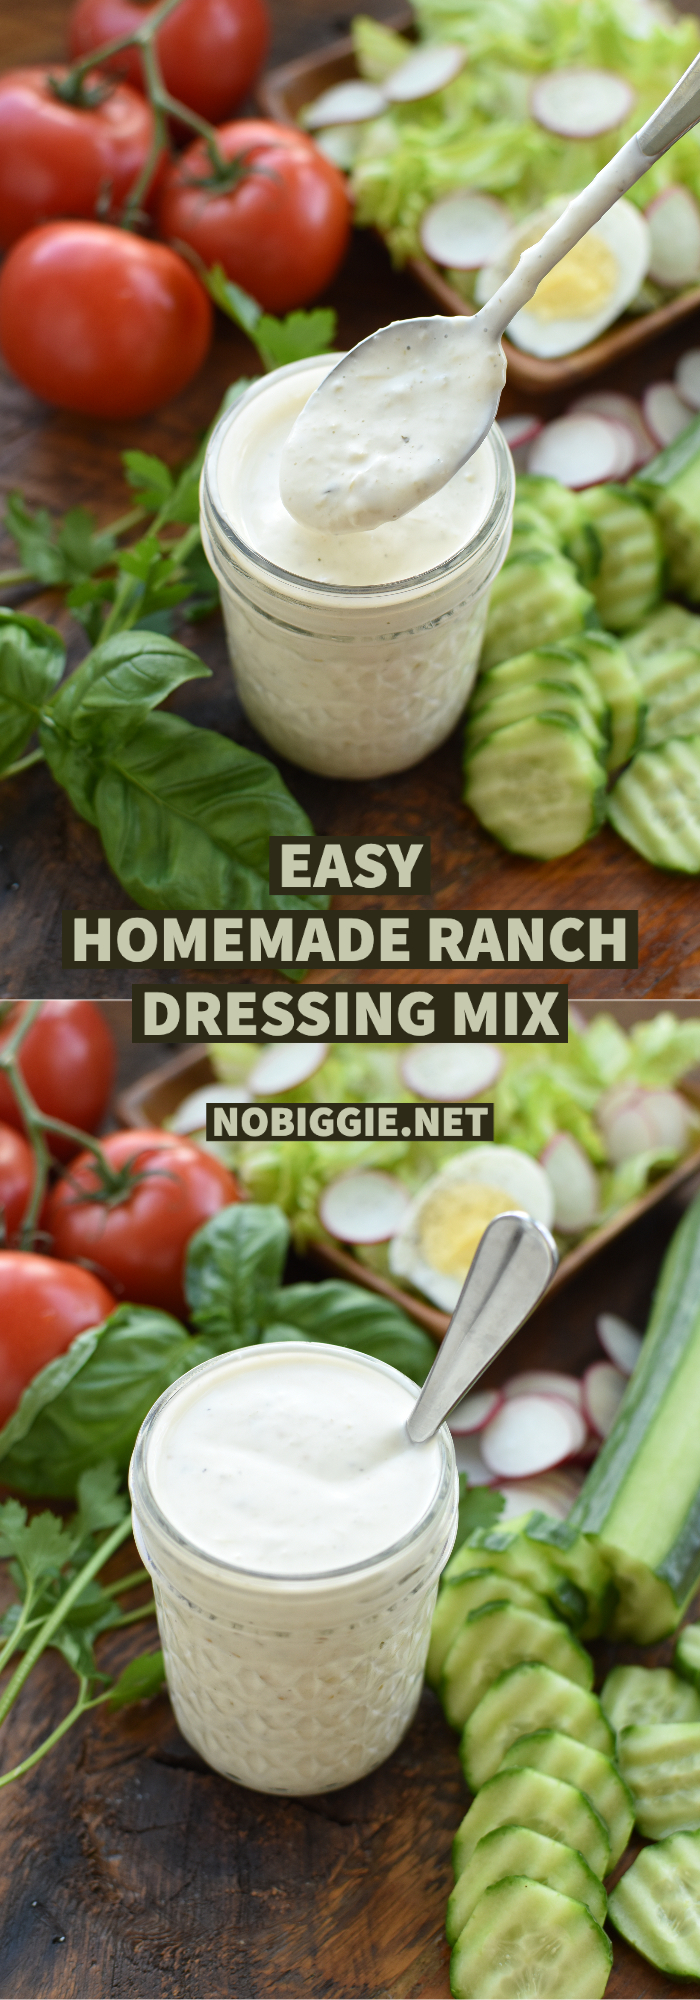 homemade ranch dressing mix | NoBiggie.net